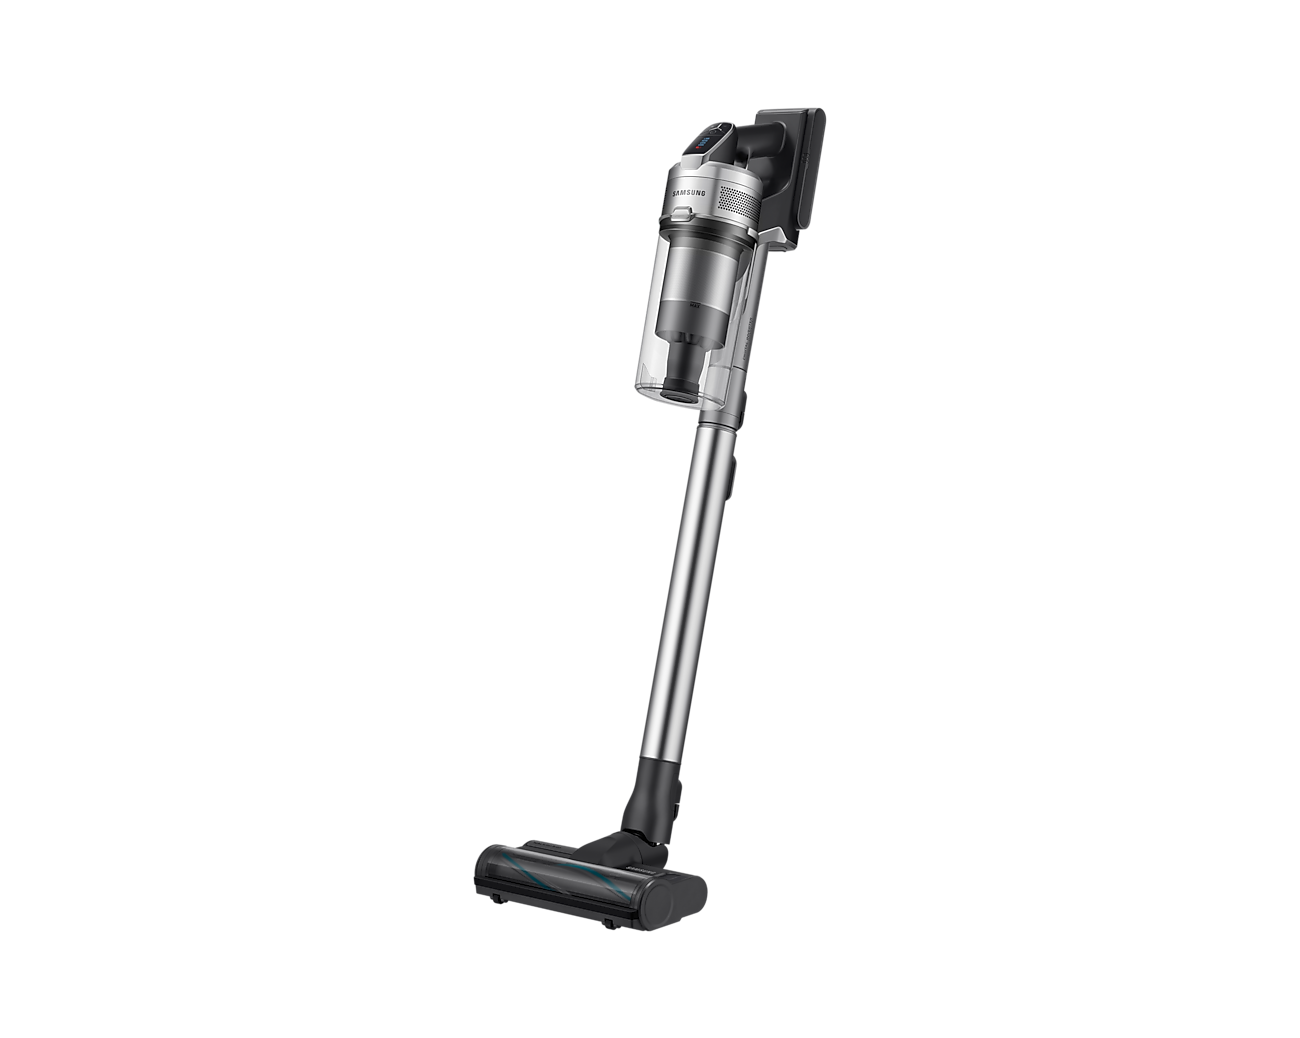 Samsung Jet 90 Complete Cordless Stick Vacuum